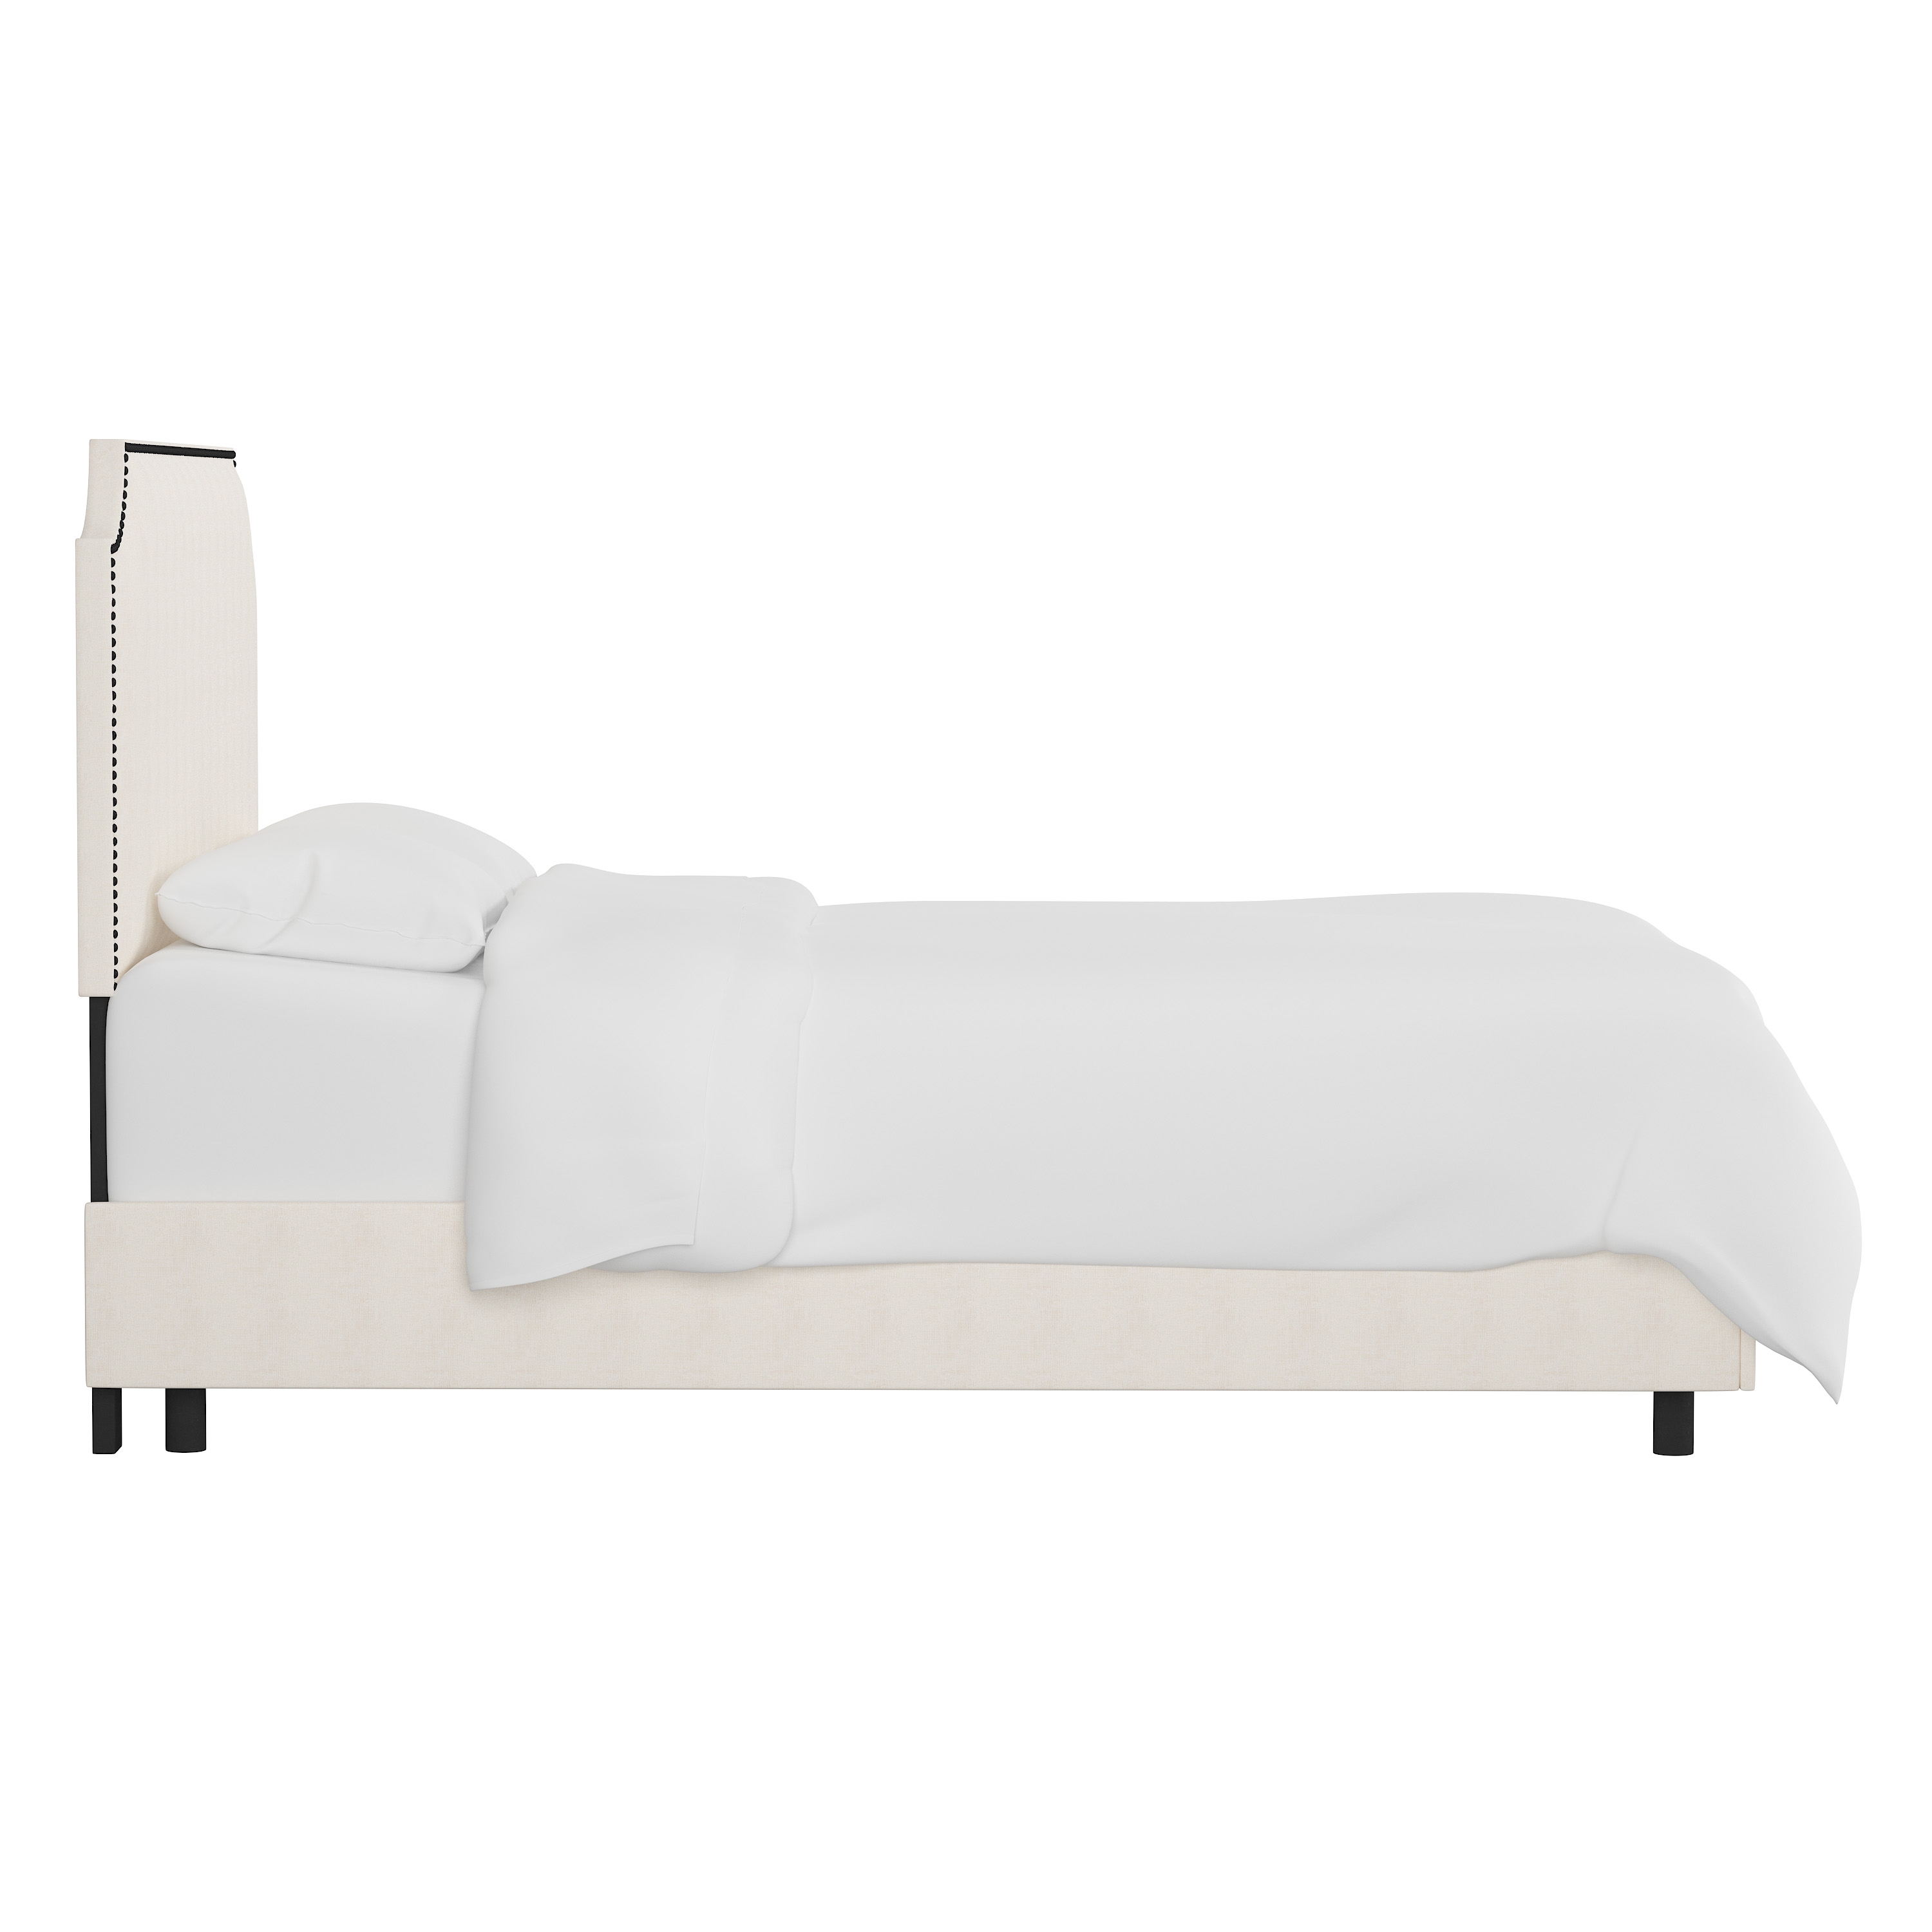 Hudson Bed, Twin, White, Black Nailheads - Image 2